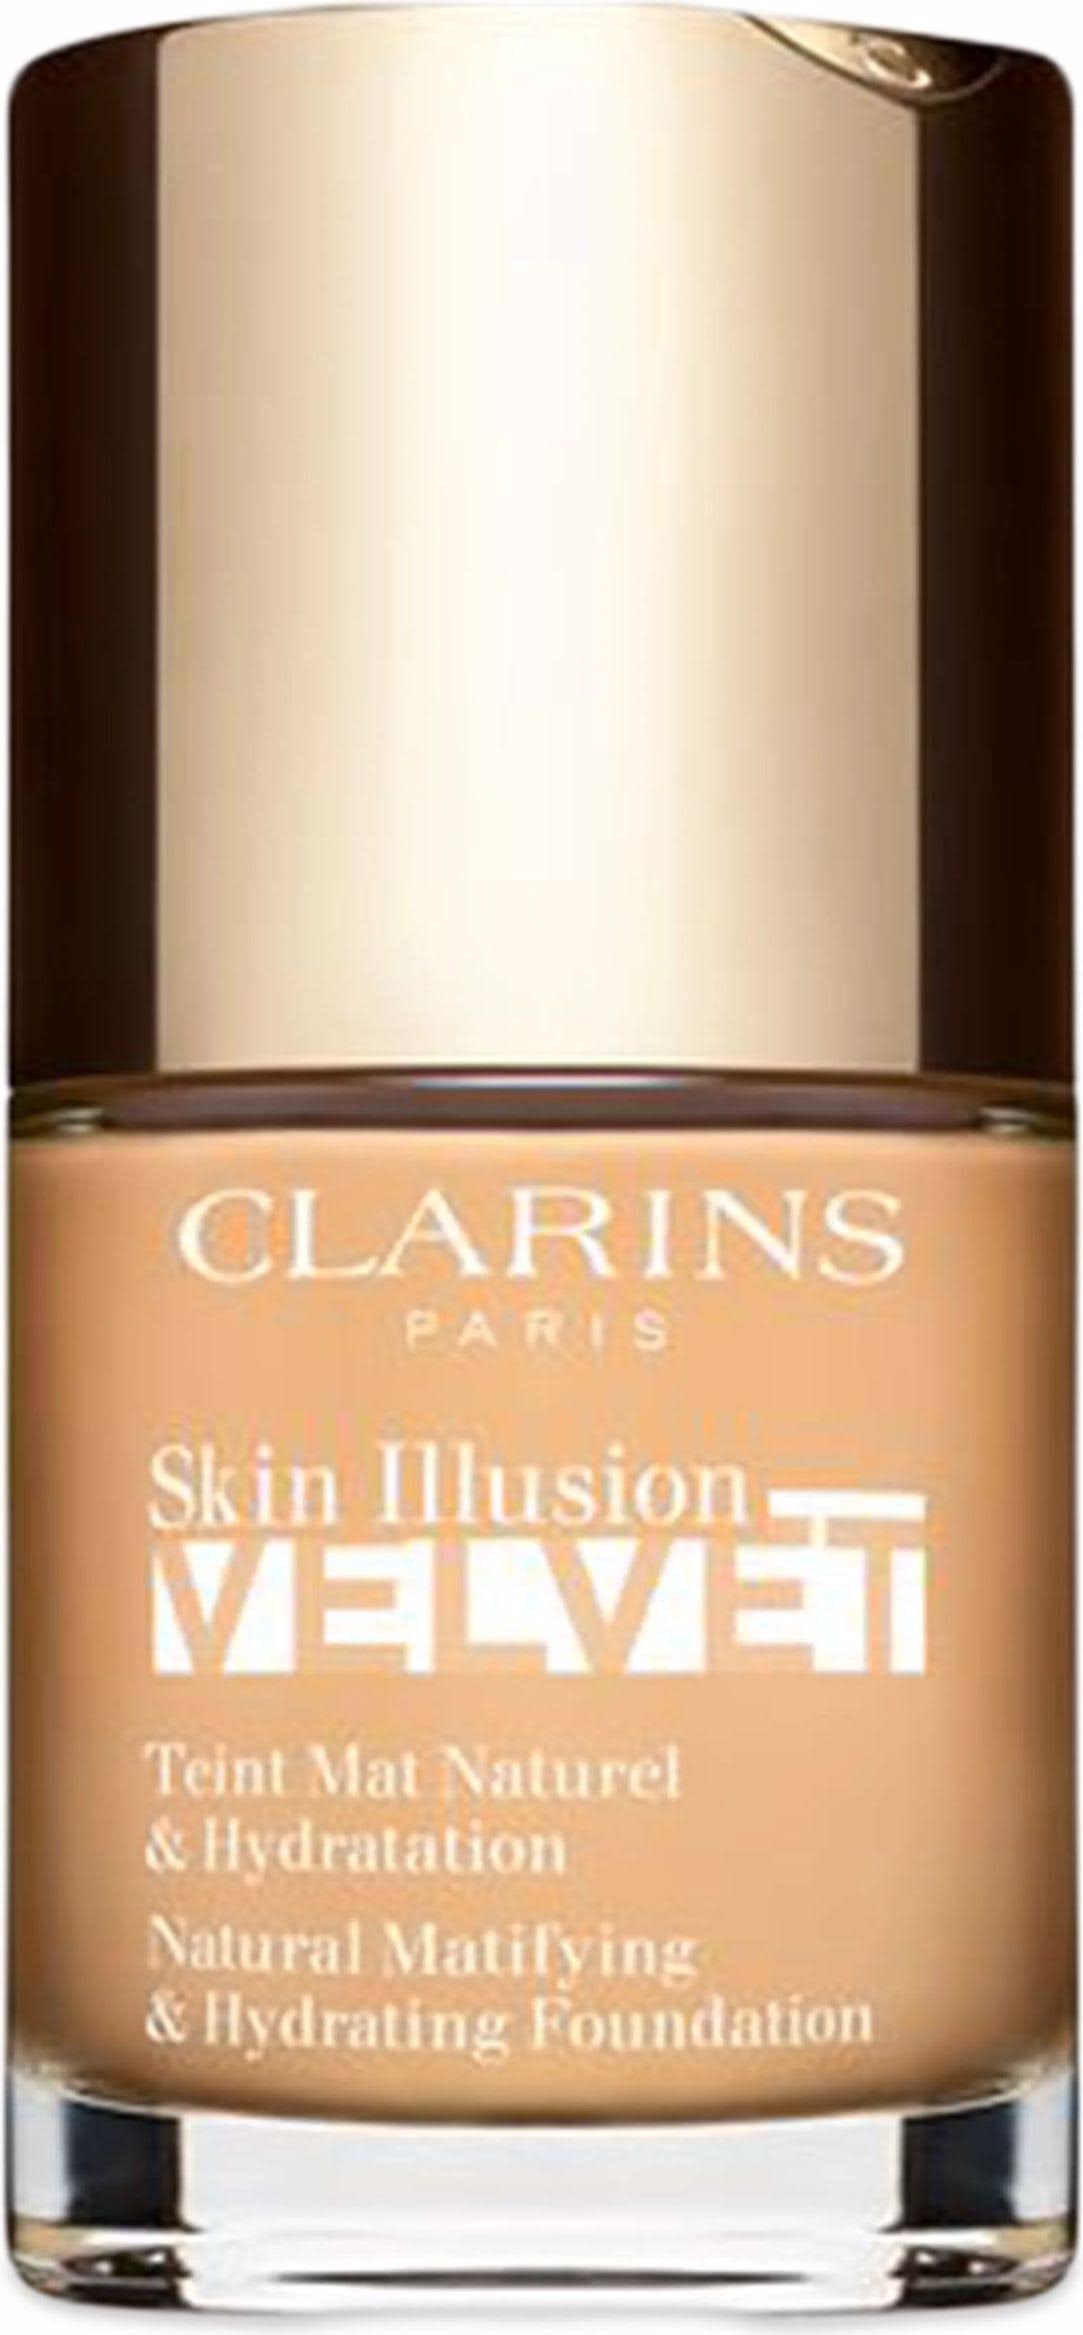 Clarins Skin Illusion Velvet - Foundation 105N